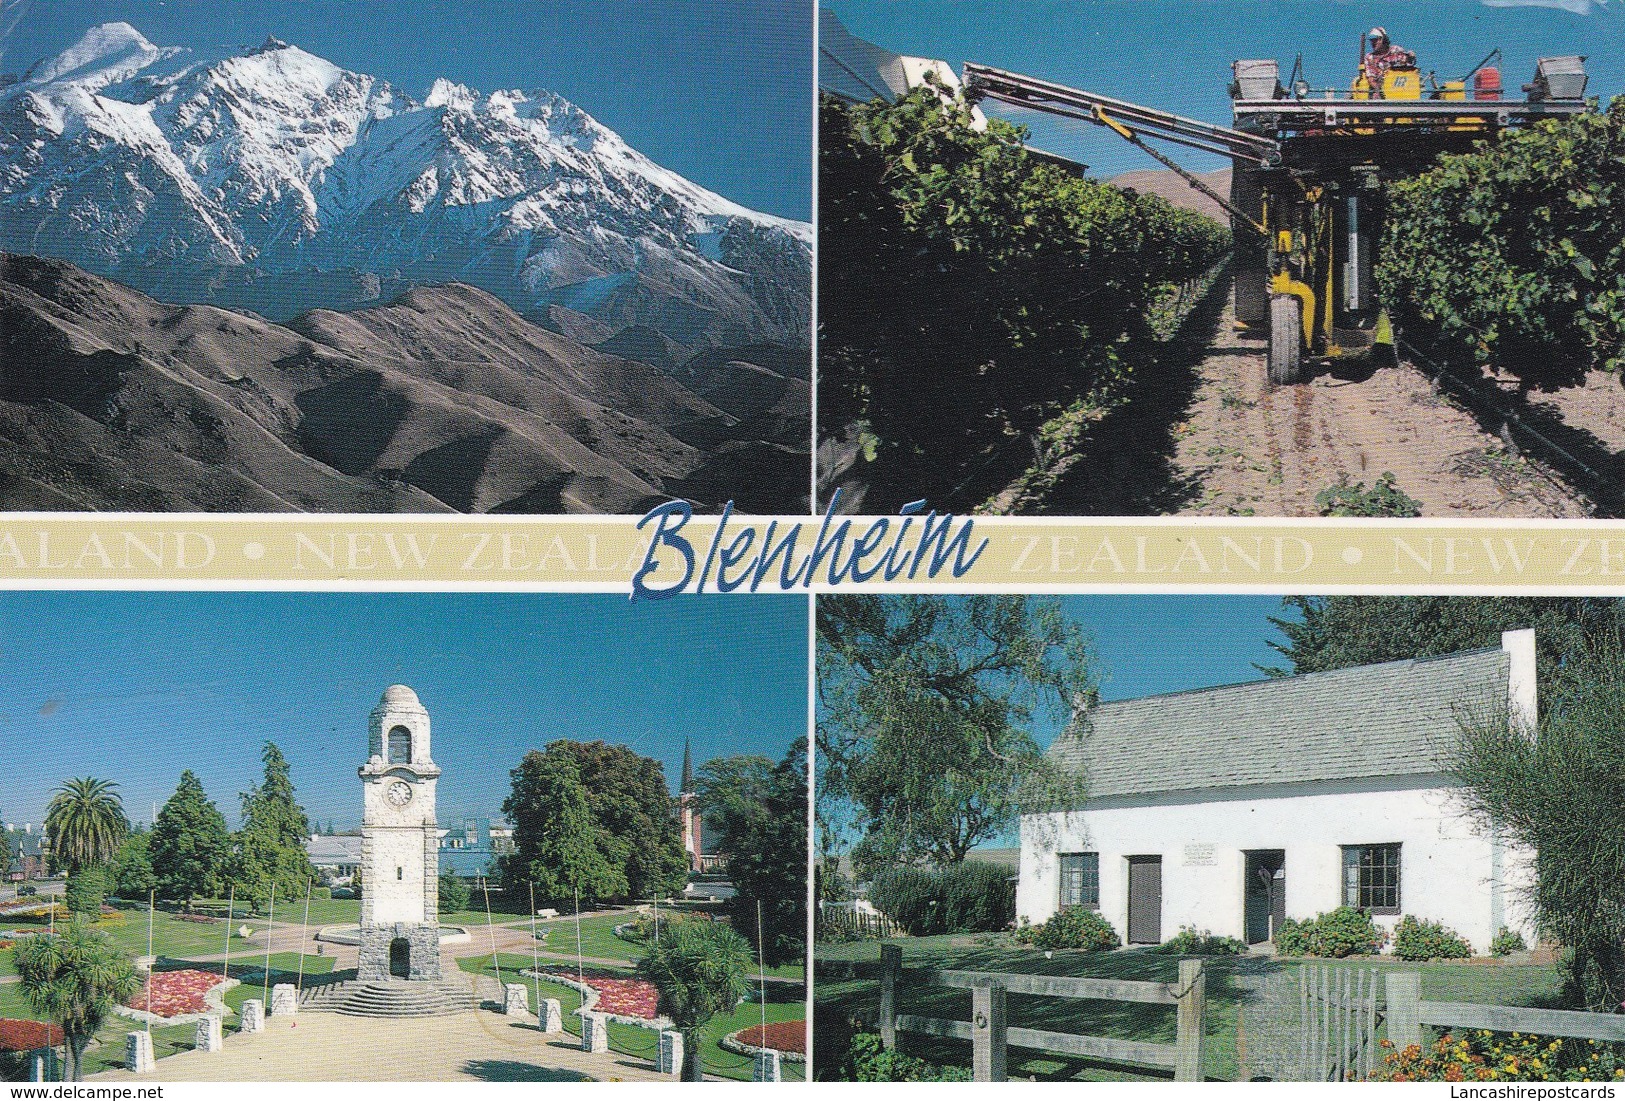 Postcard  New Zealand Blenheim Marlborough Grape Harvesting Seymour Square Cobb Cottage PU 1998 My Ref  B23108 - New Zealand